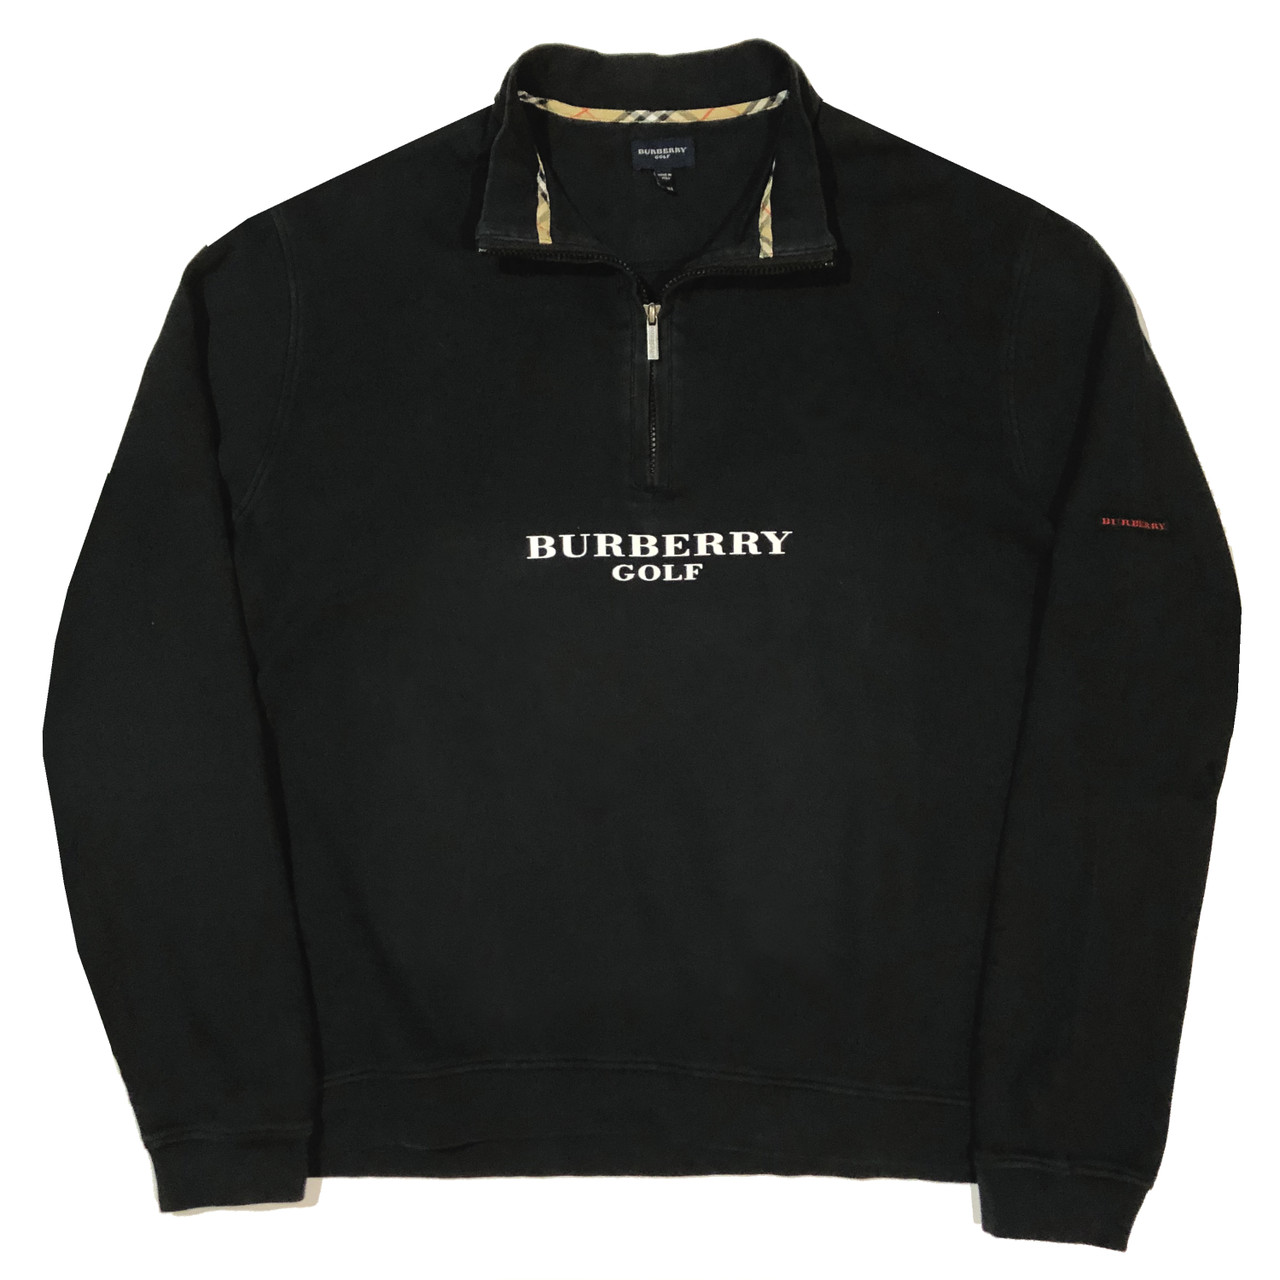 burberry golf sweater